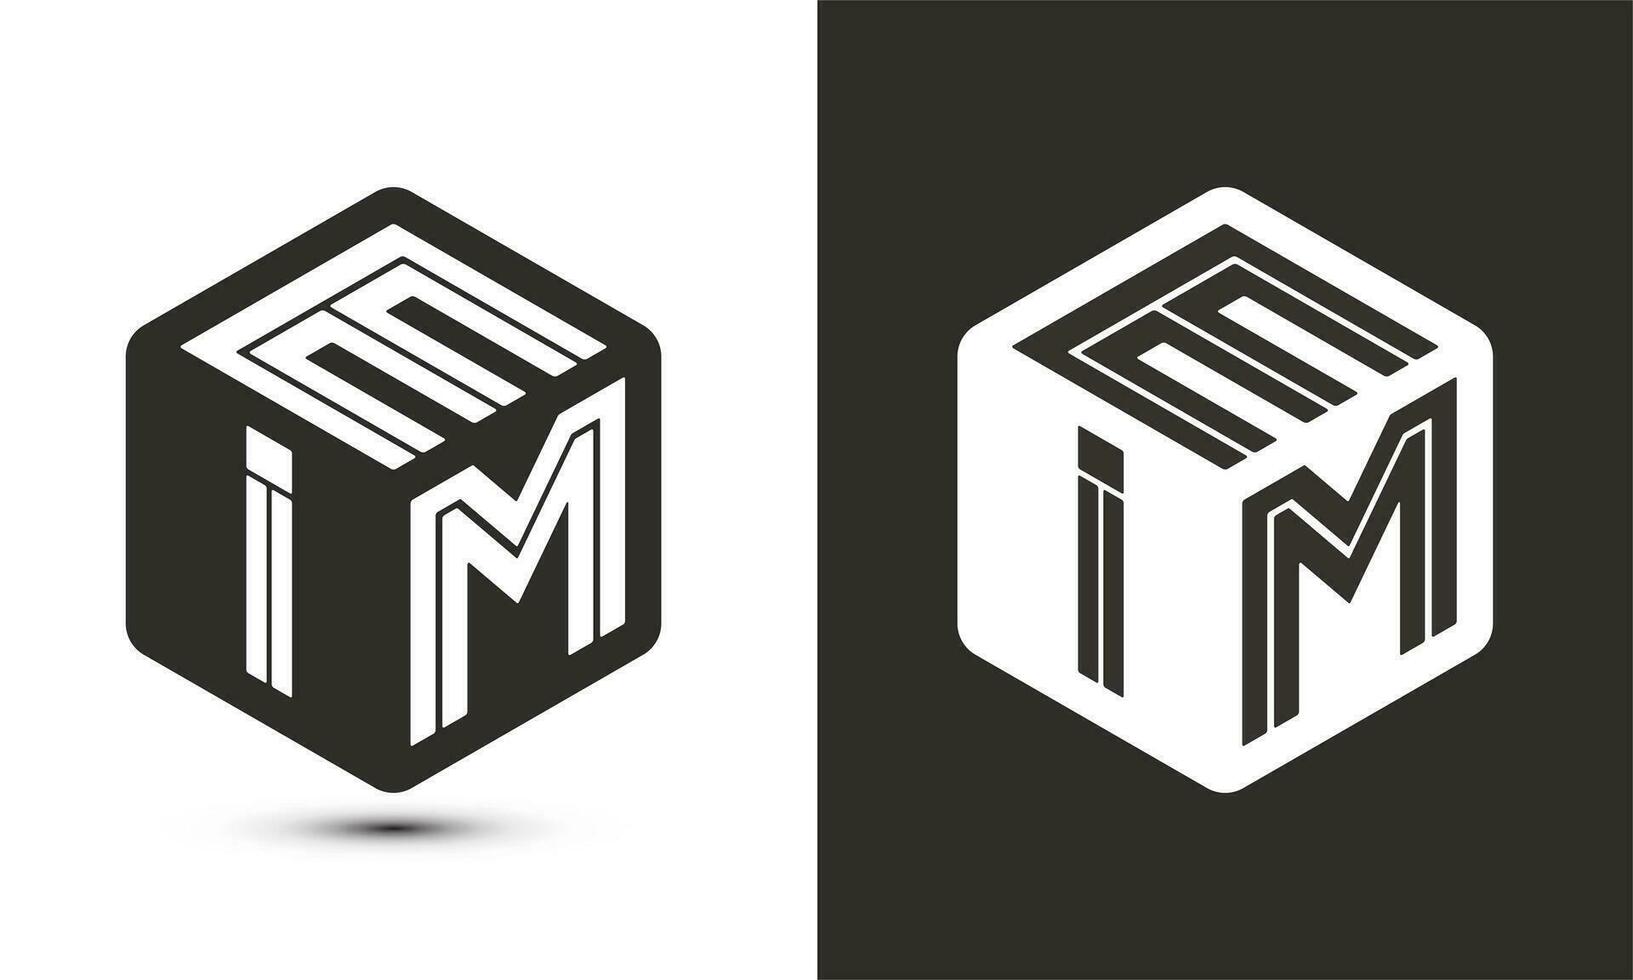 eim letra logo diseño con ilustrador cubo logo, vector logo moderno alfabeto fuente superposición estilo.